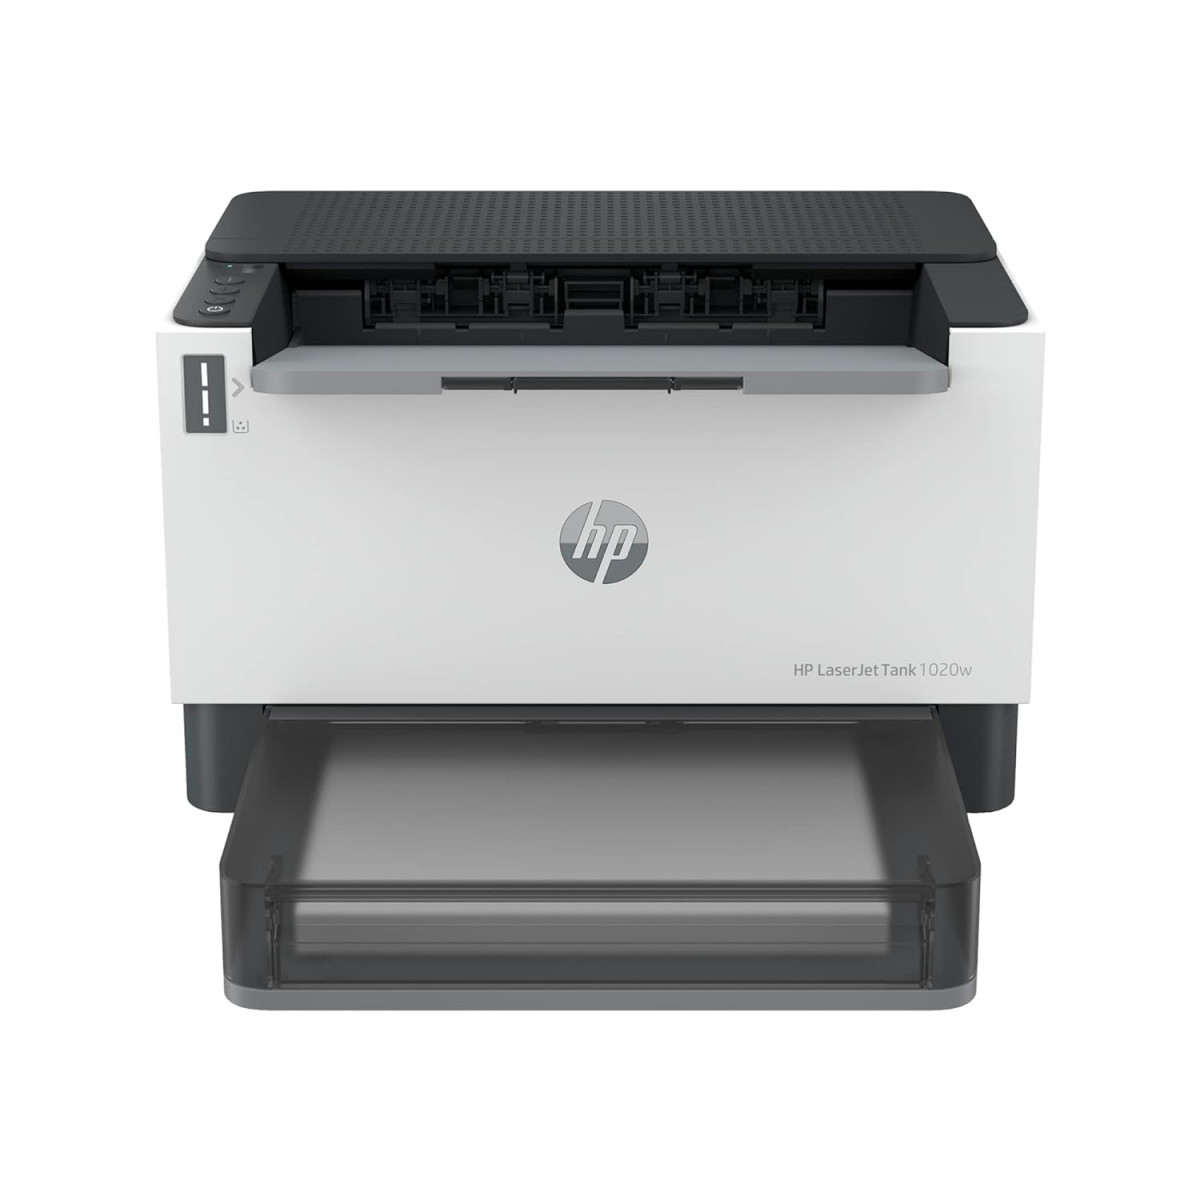 HP Laserjet Tank 1020w Printer, Wireless, Print, Hi-Speed USB 2.0, Bluetooth LE, Up to 22 ppm, 150-sheet Input Tray